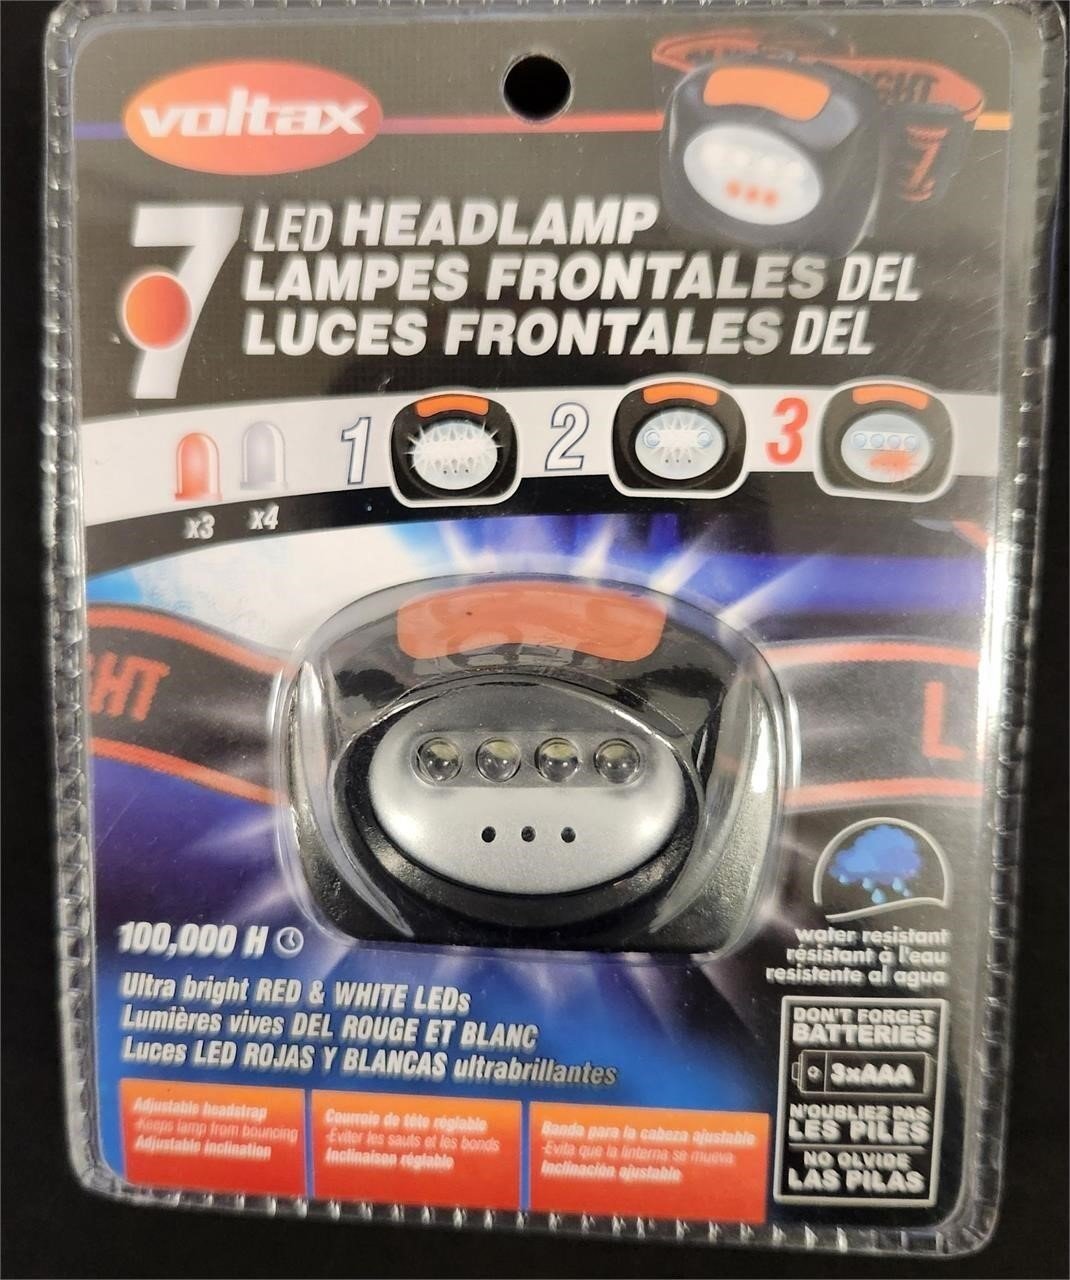 Voltax 7 LED Head Lamp 100,000 H